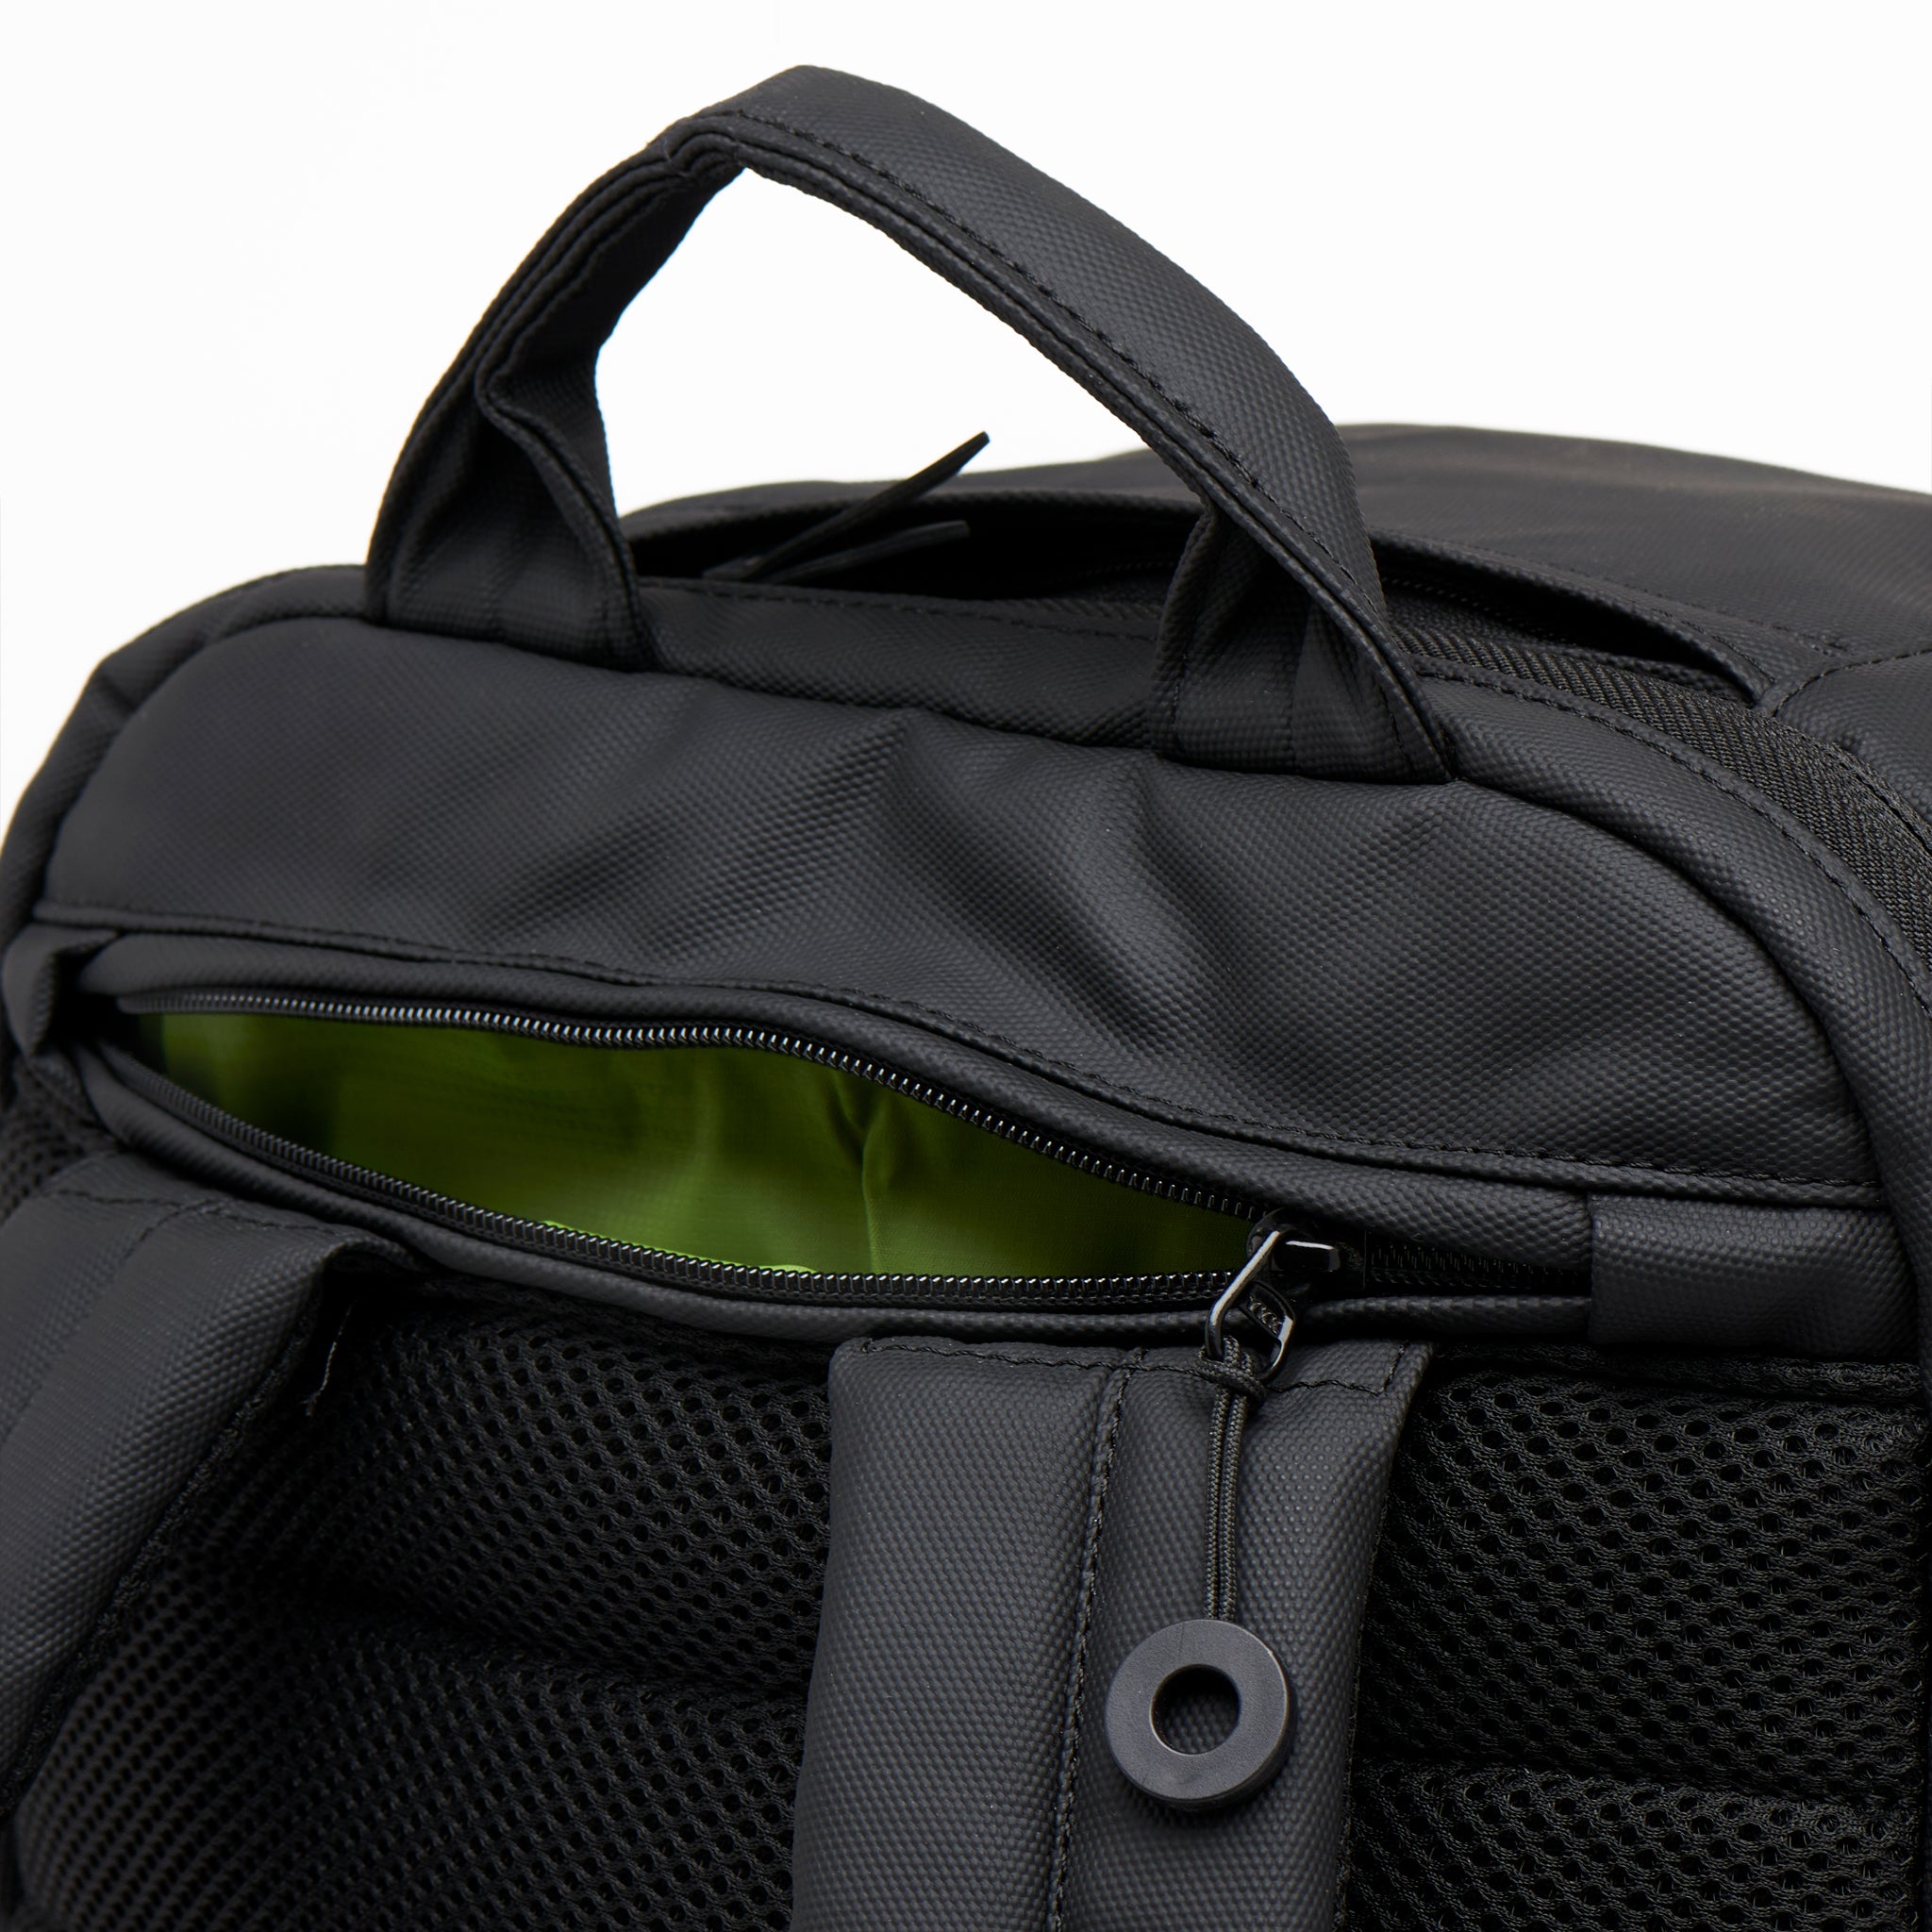 Mueslii travel backpack, made of PU coated waterproof nylon, color black, external anti-theft pocket.